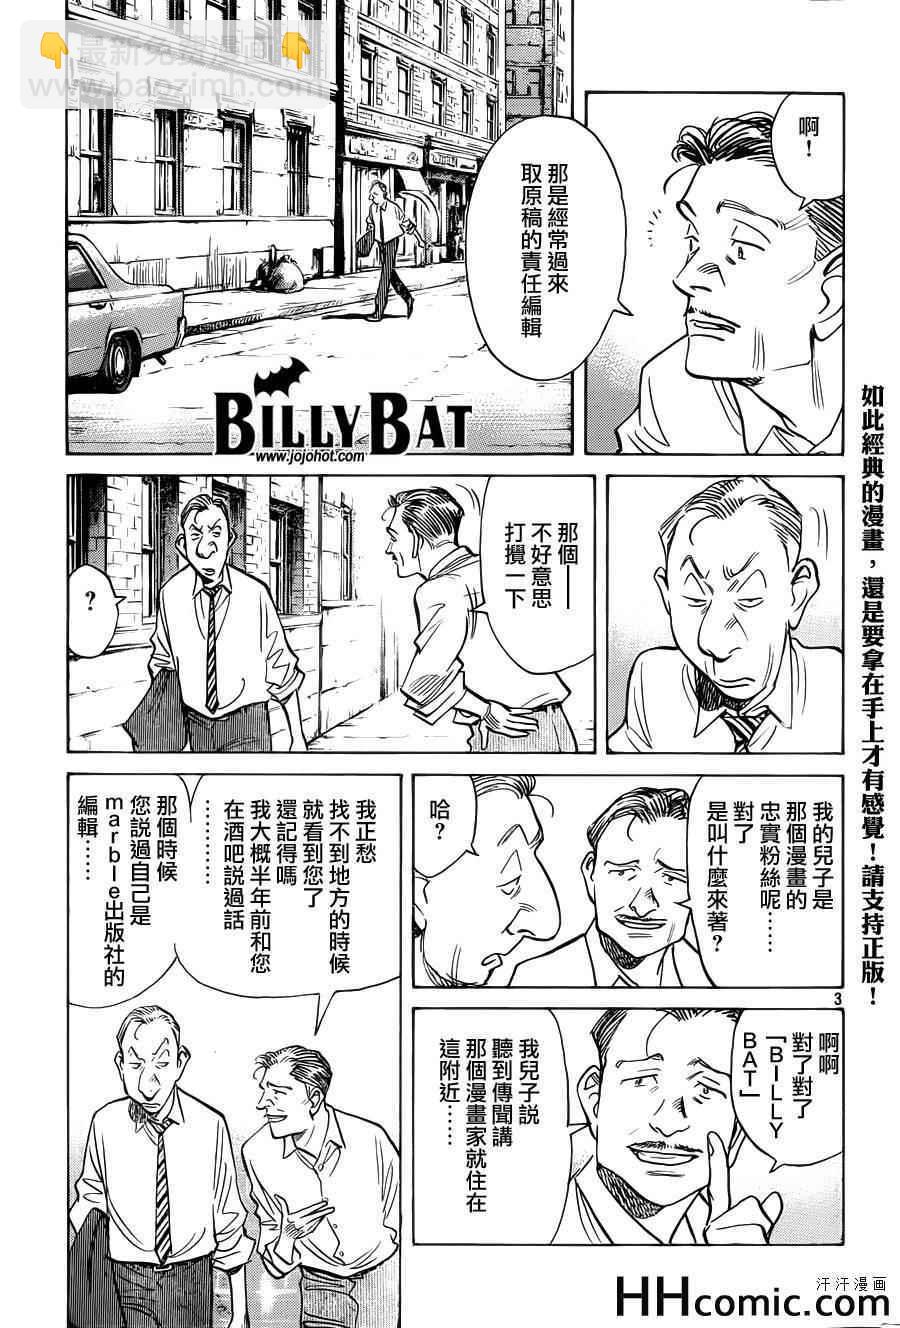 Billy_Bat - 第111話 - 3